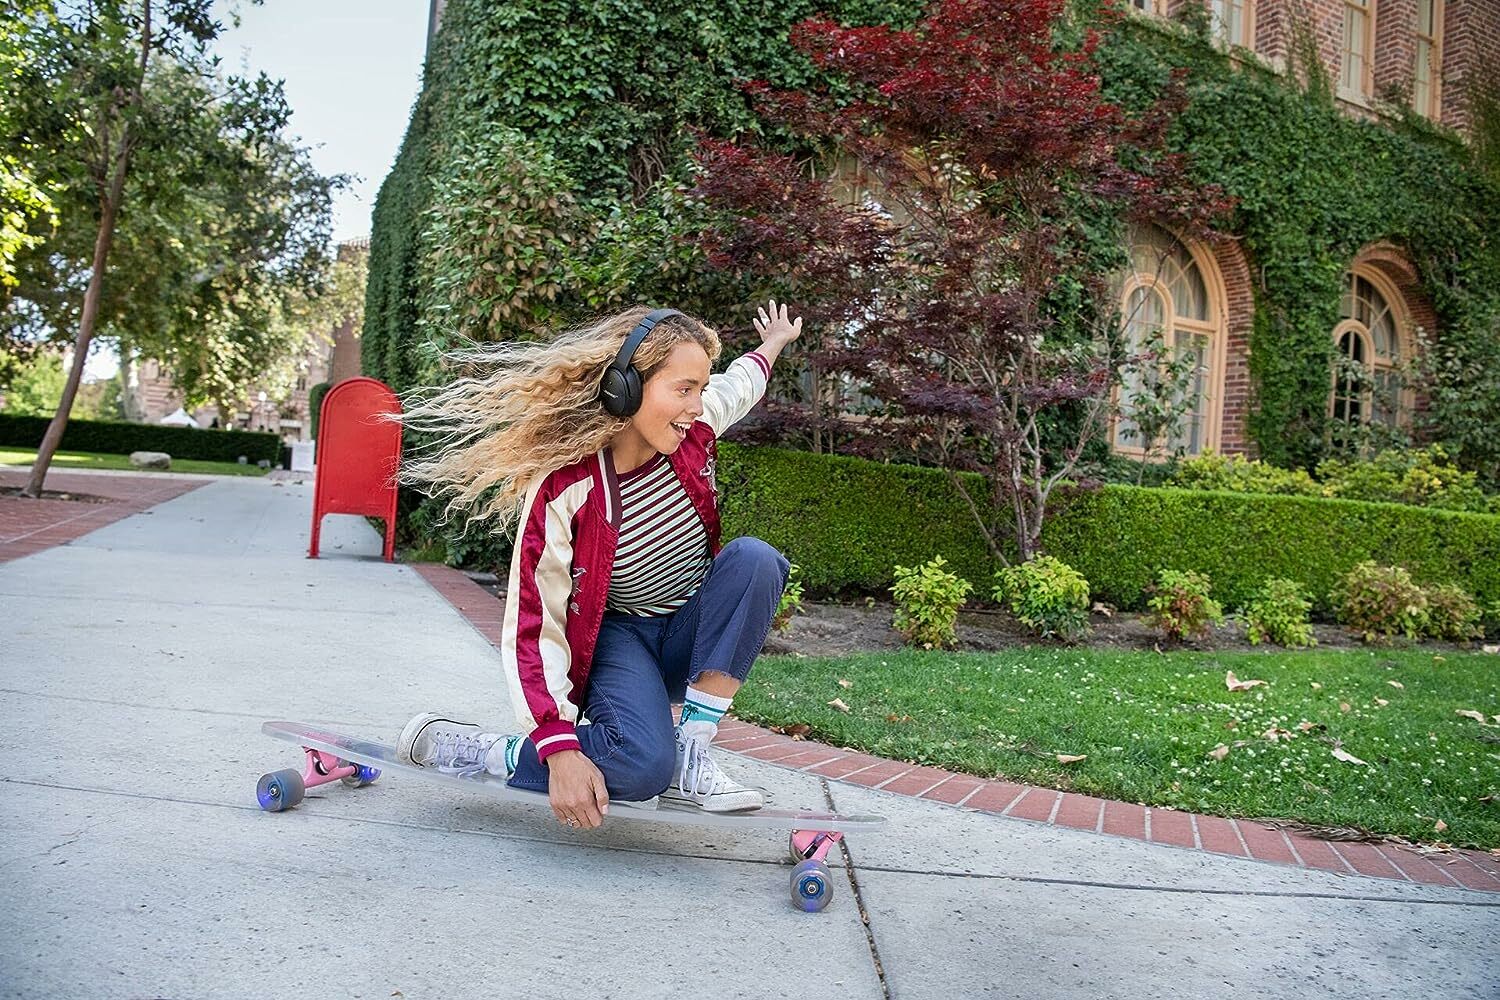 Girl riding skateboard with Bose headphones